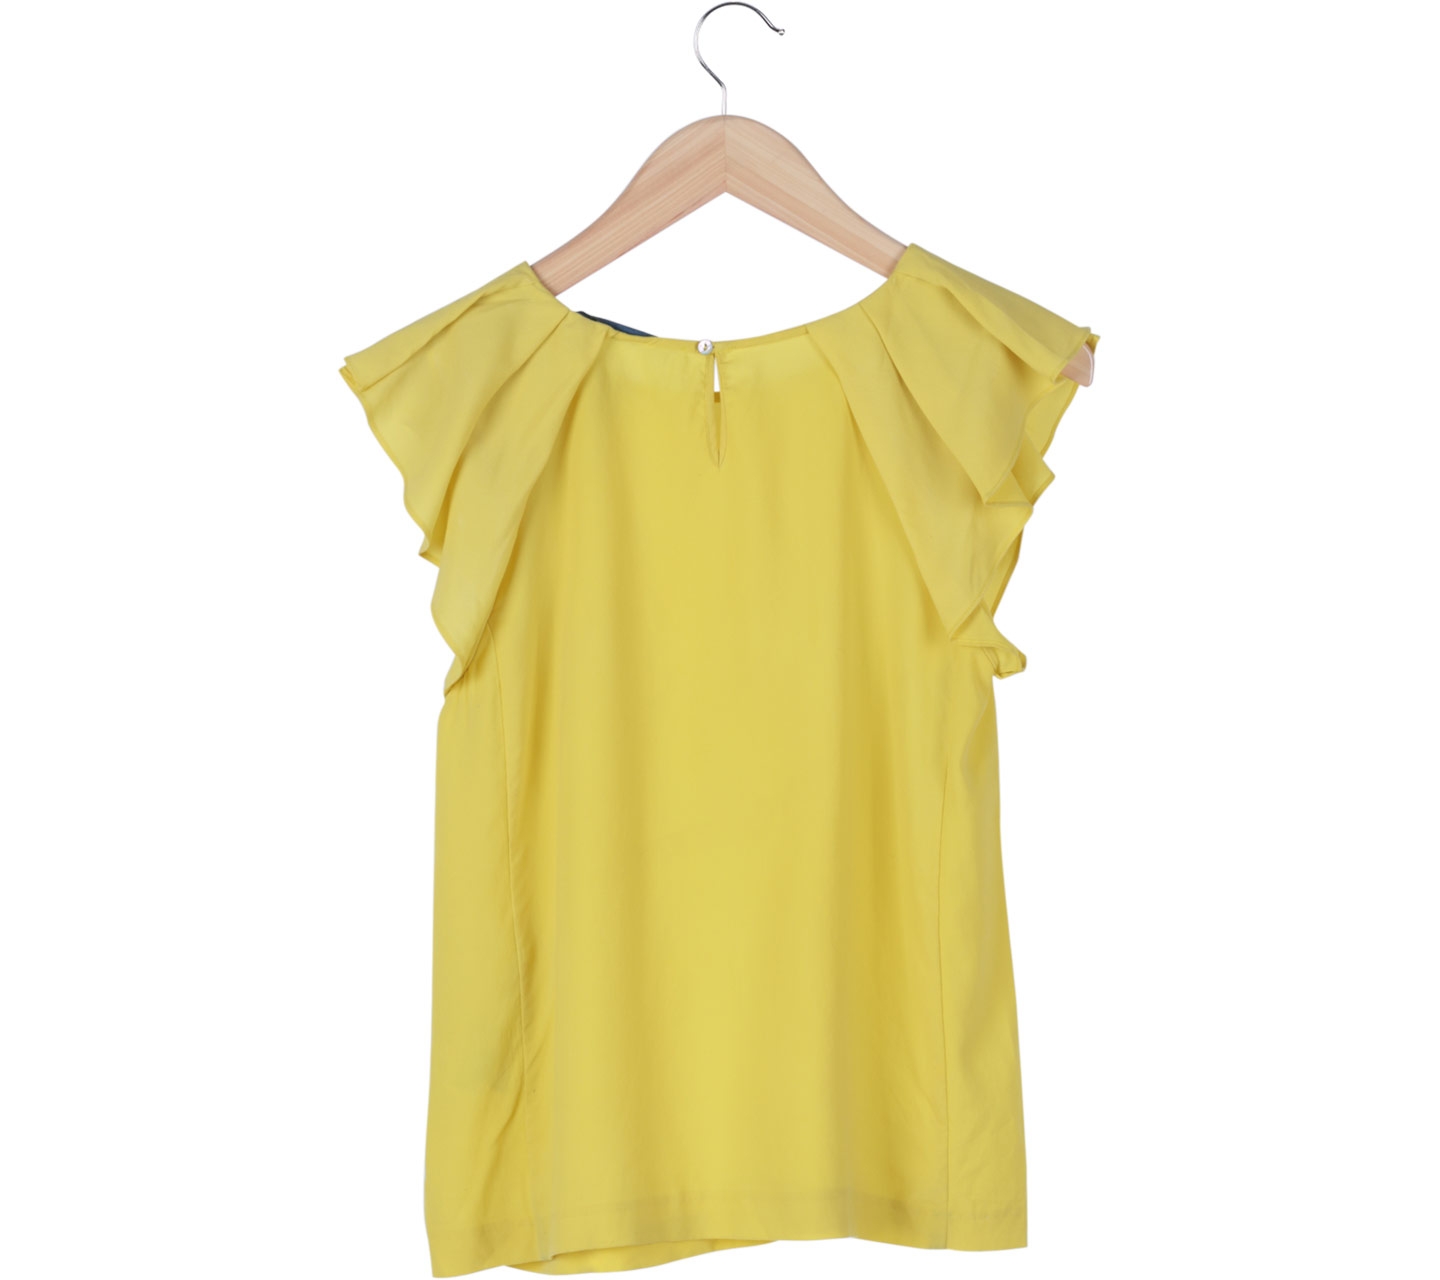 Zara Yellow Pleats Blouse